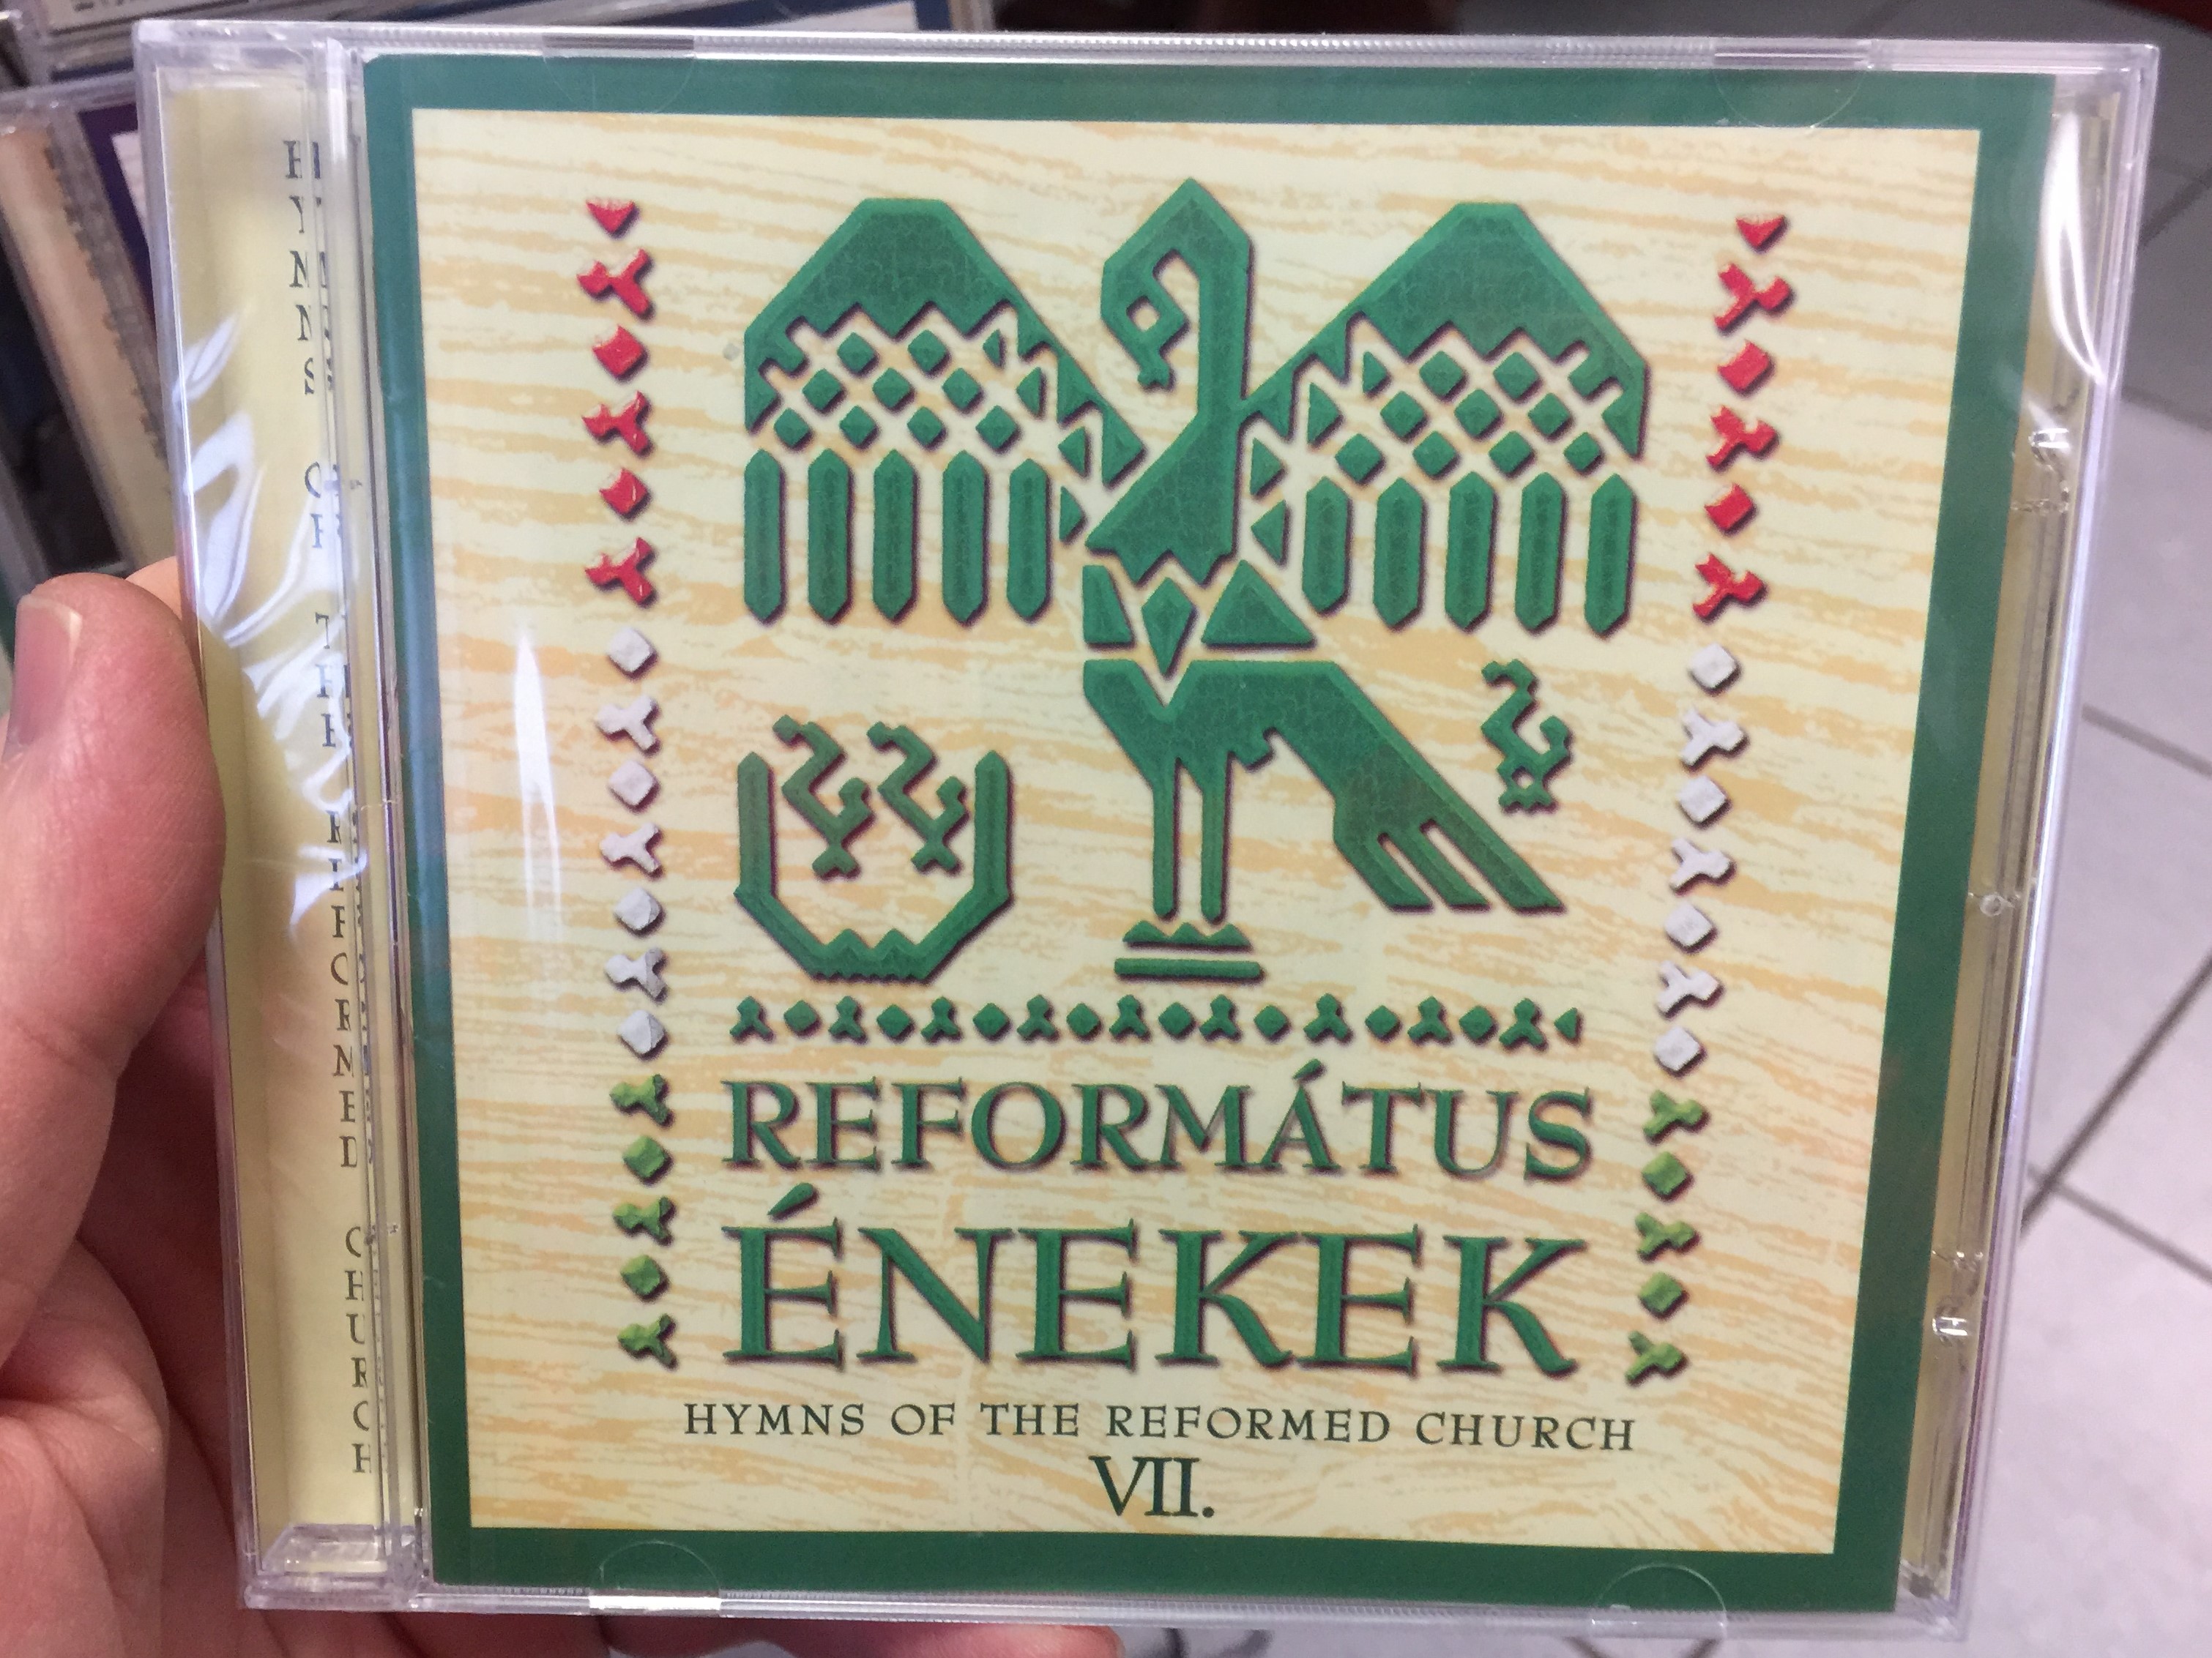 reform-tus-nekek-7.-audio-cd-2008-hymns-of-the-reformed-church-vii.-1.jpg